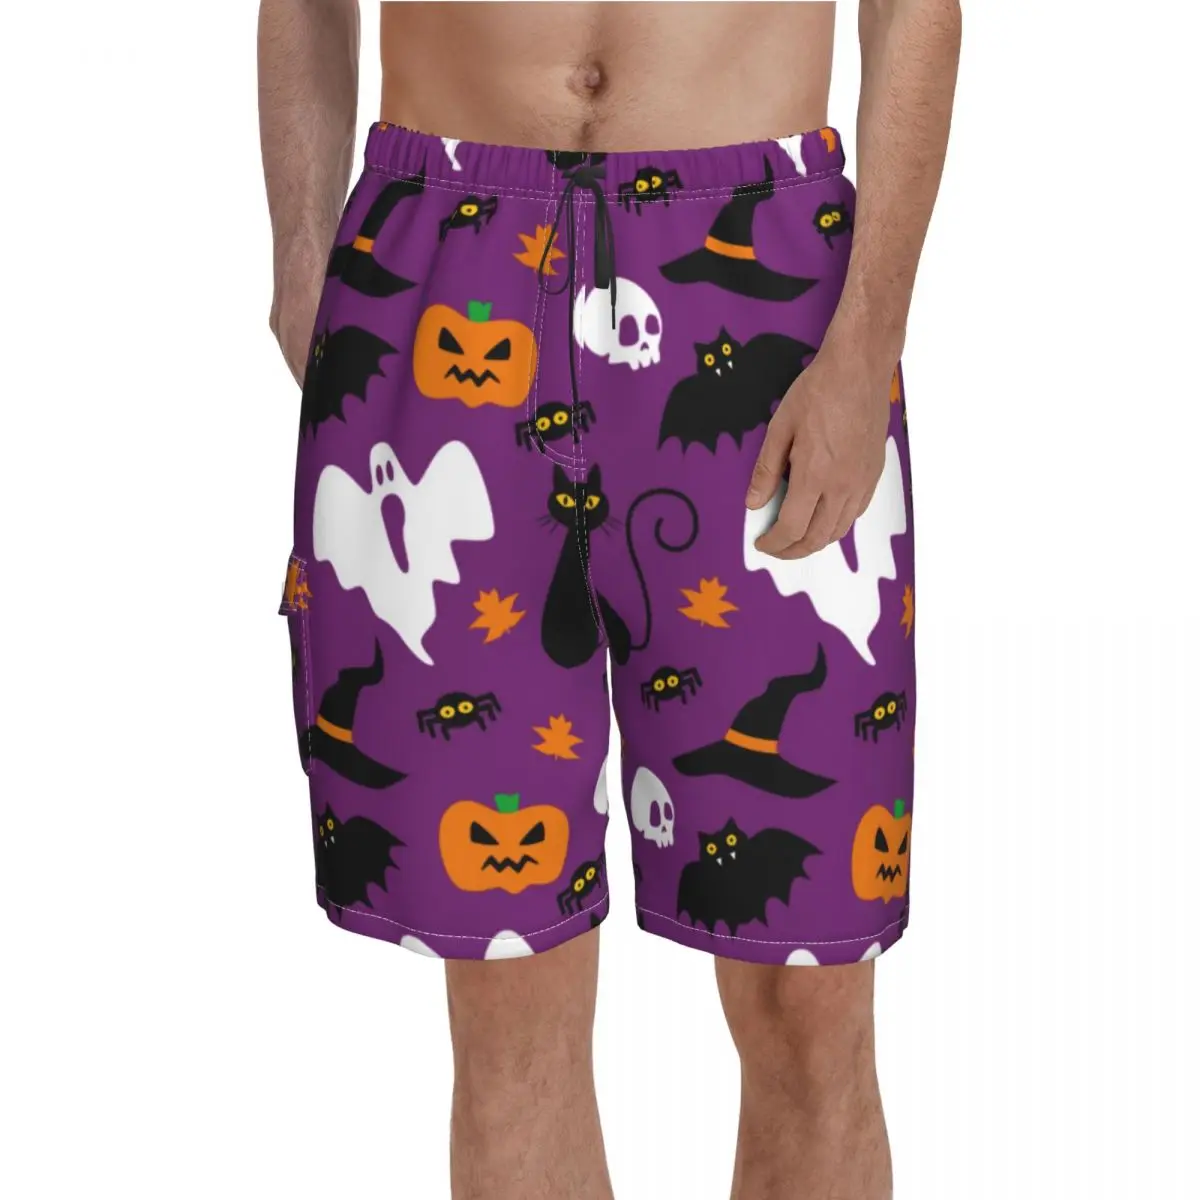 

Cute Halloween Board Shorts Spooky Pumpkin Boo Ghost Skull Men Funny Beach Shorts Hot Sale Print Oversize Swimming Trunks